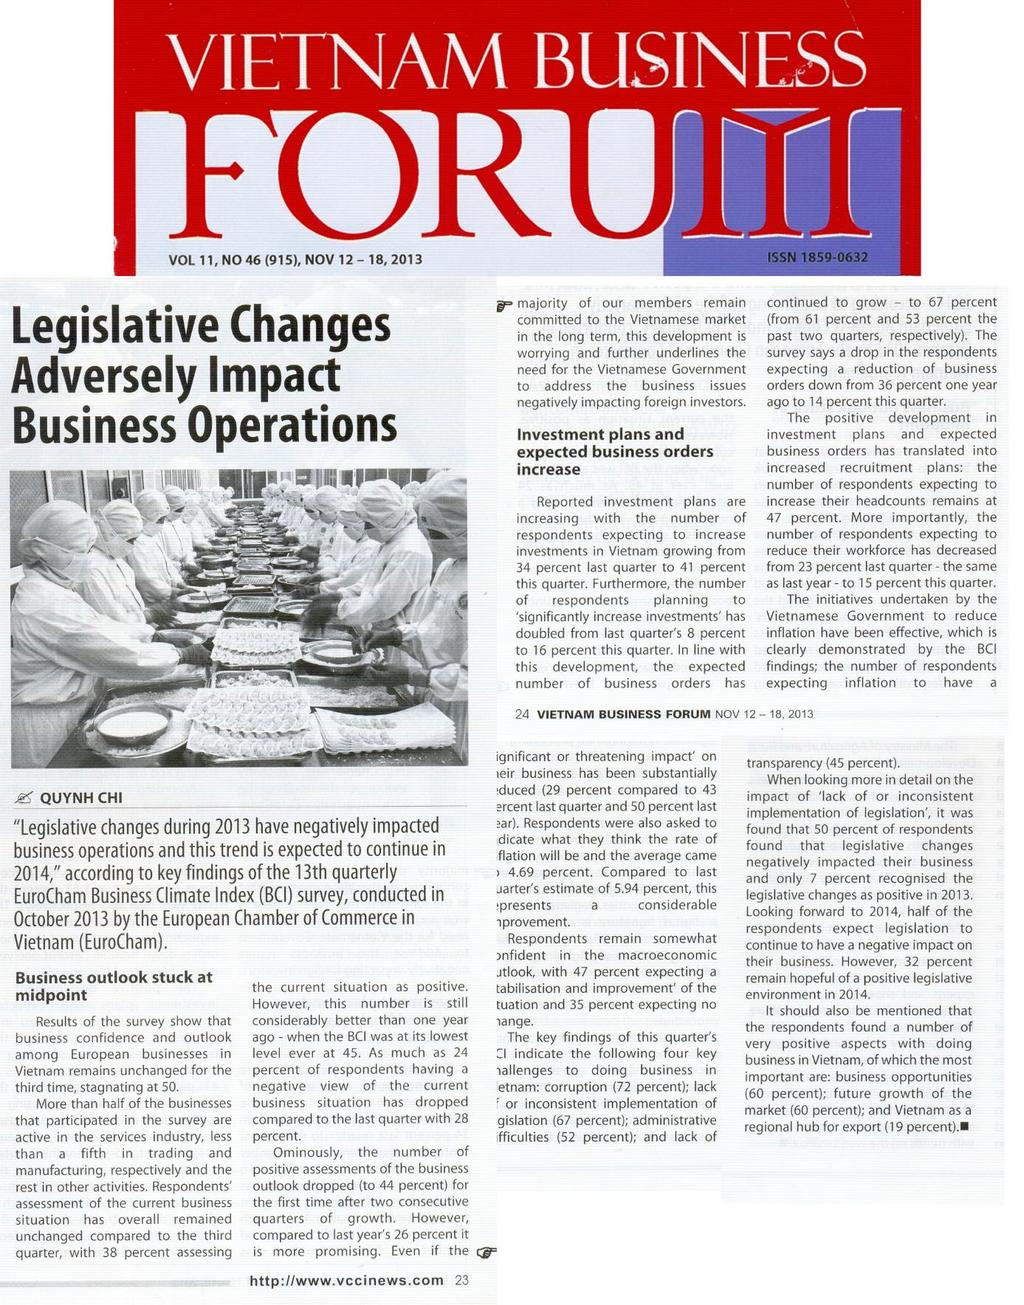 5. Vietnam Business Forum Legislative changes